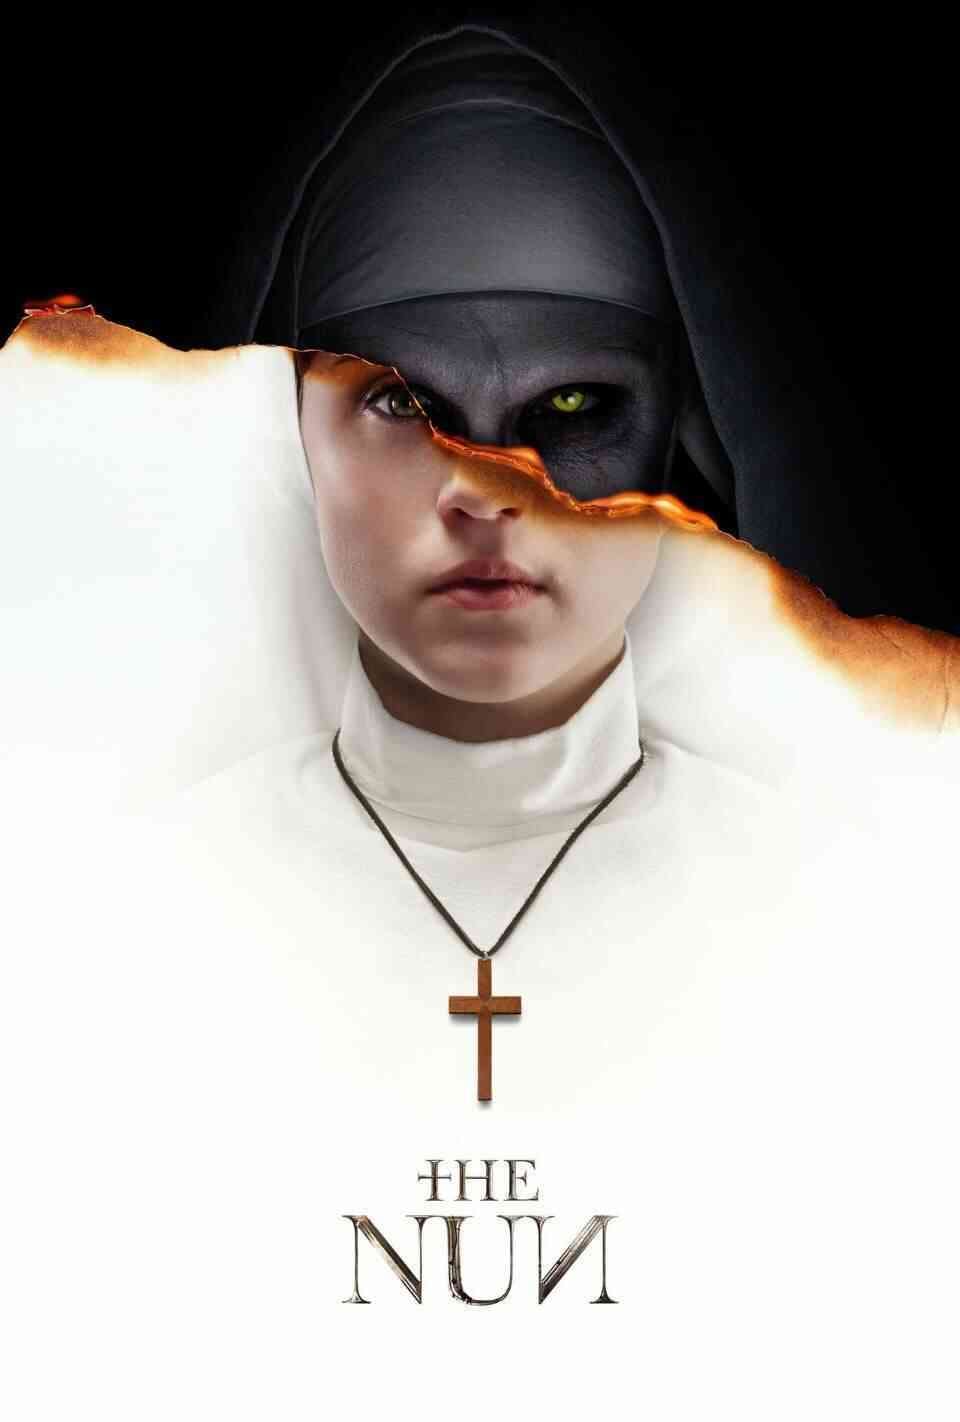 Read The Nun screenplay (poster)